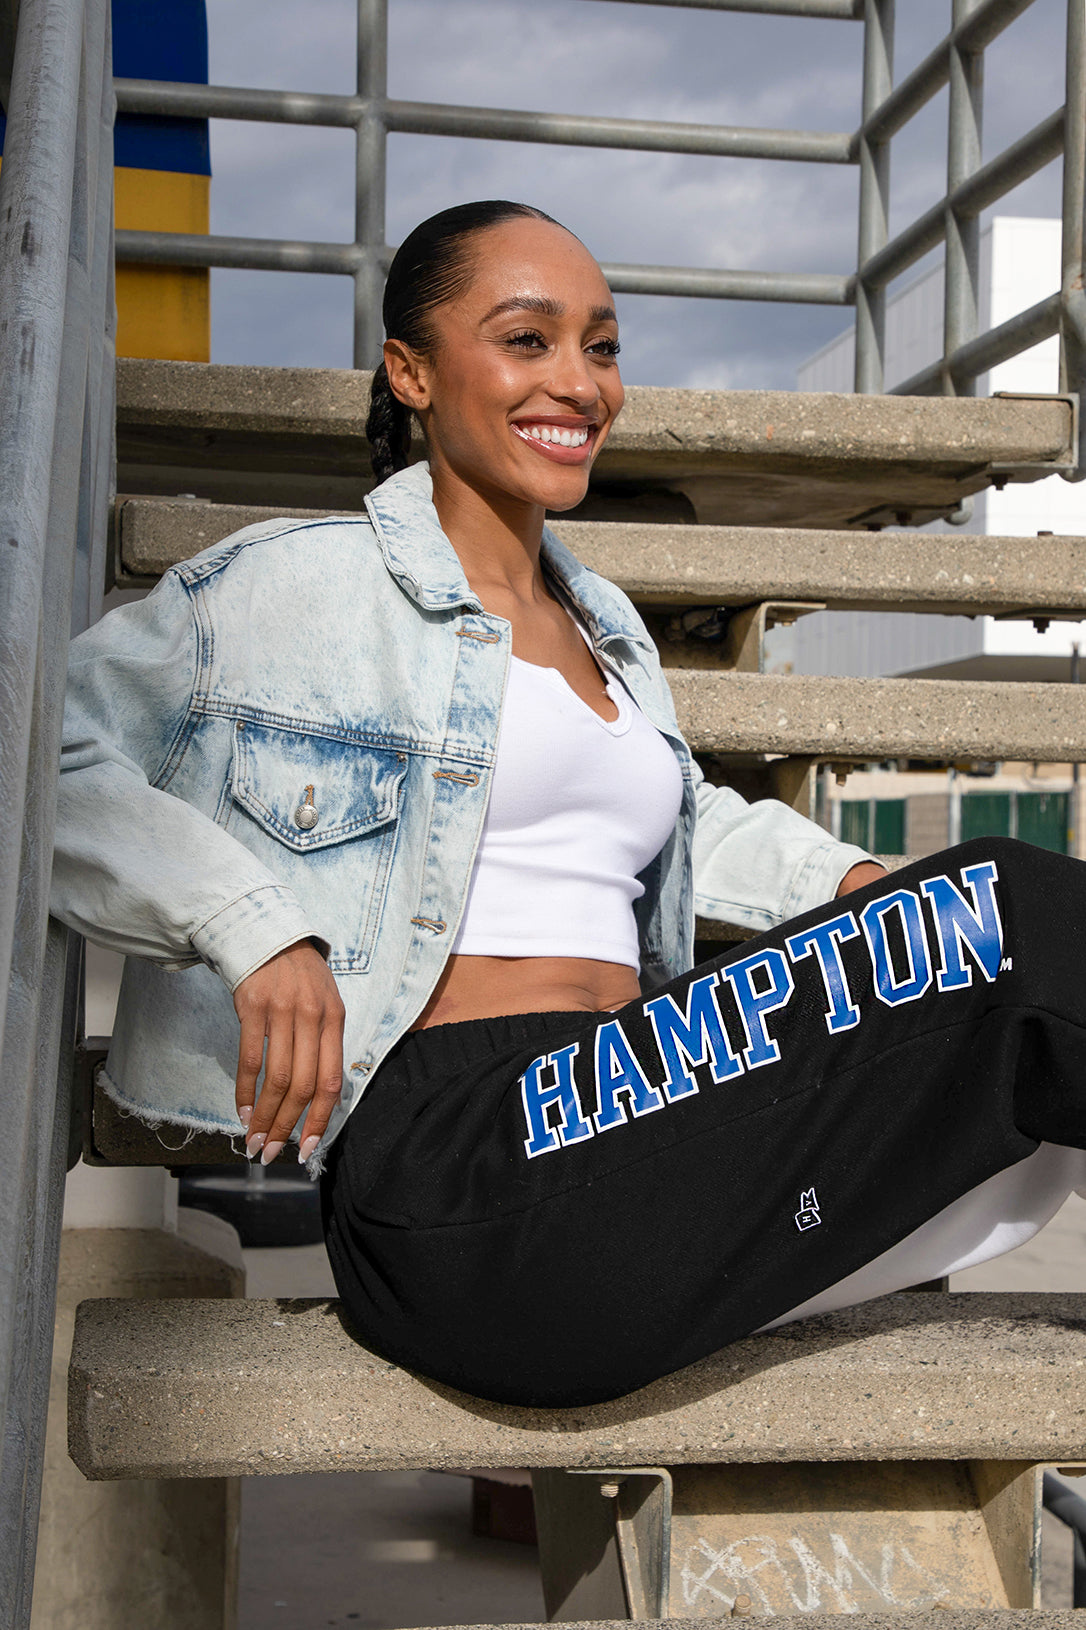 Hampton Color-Block Sweats